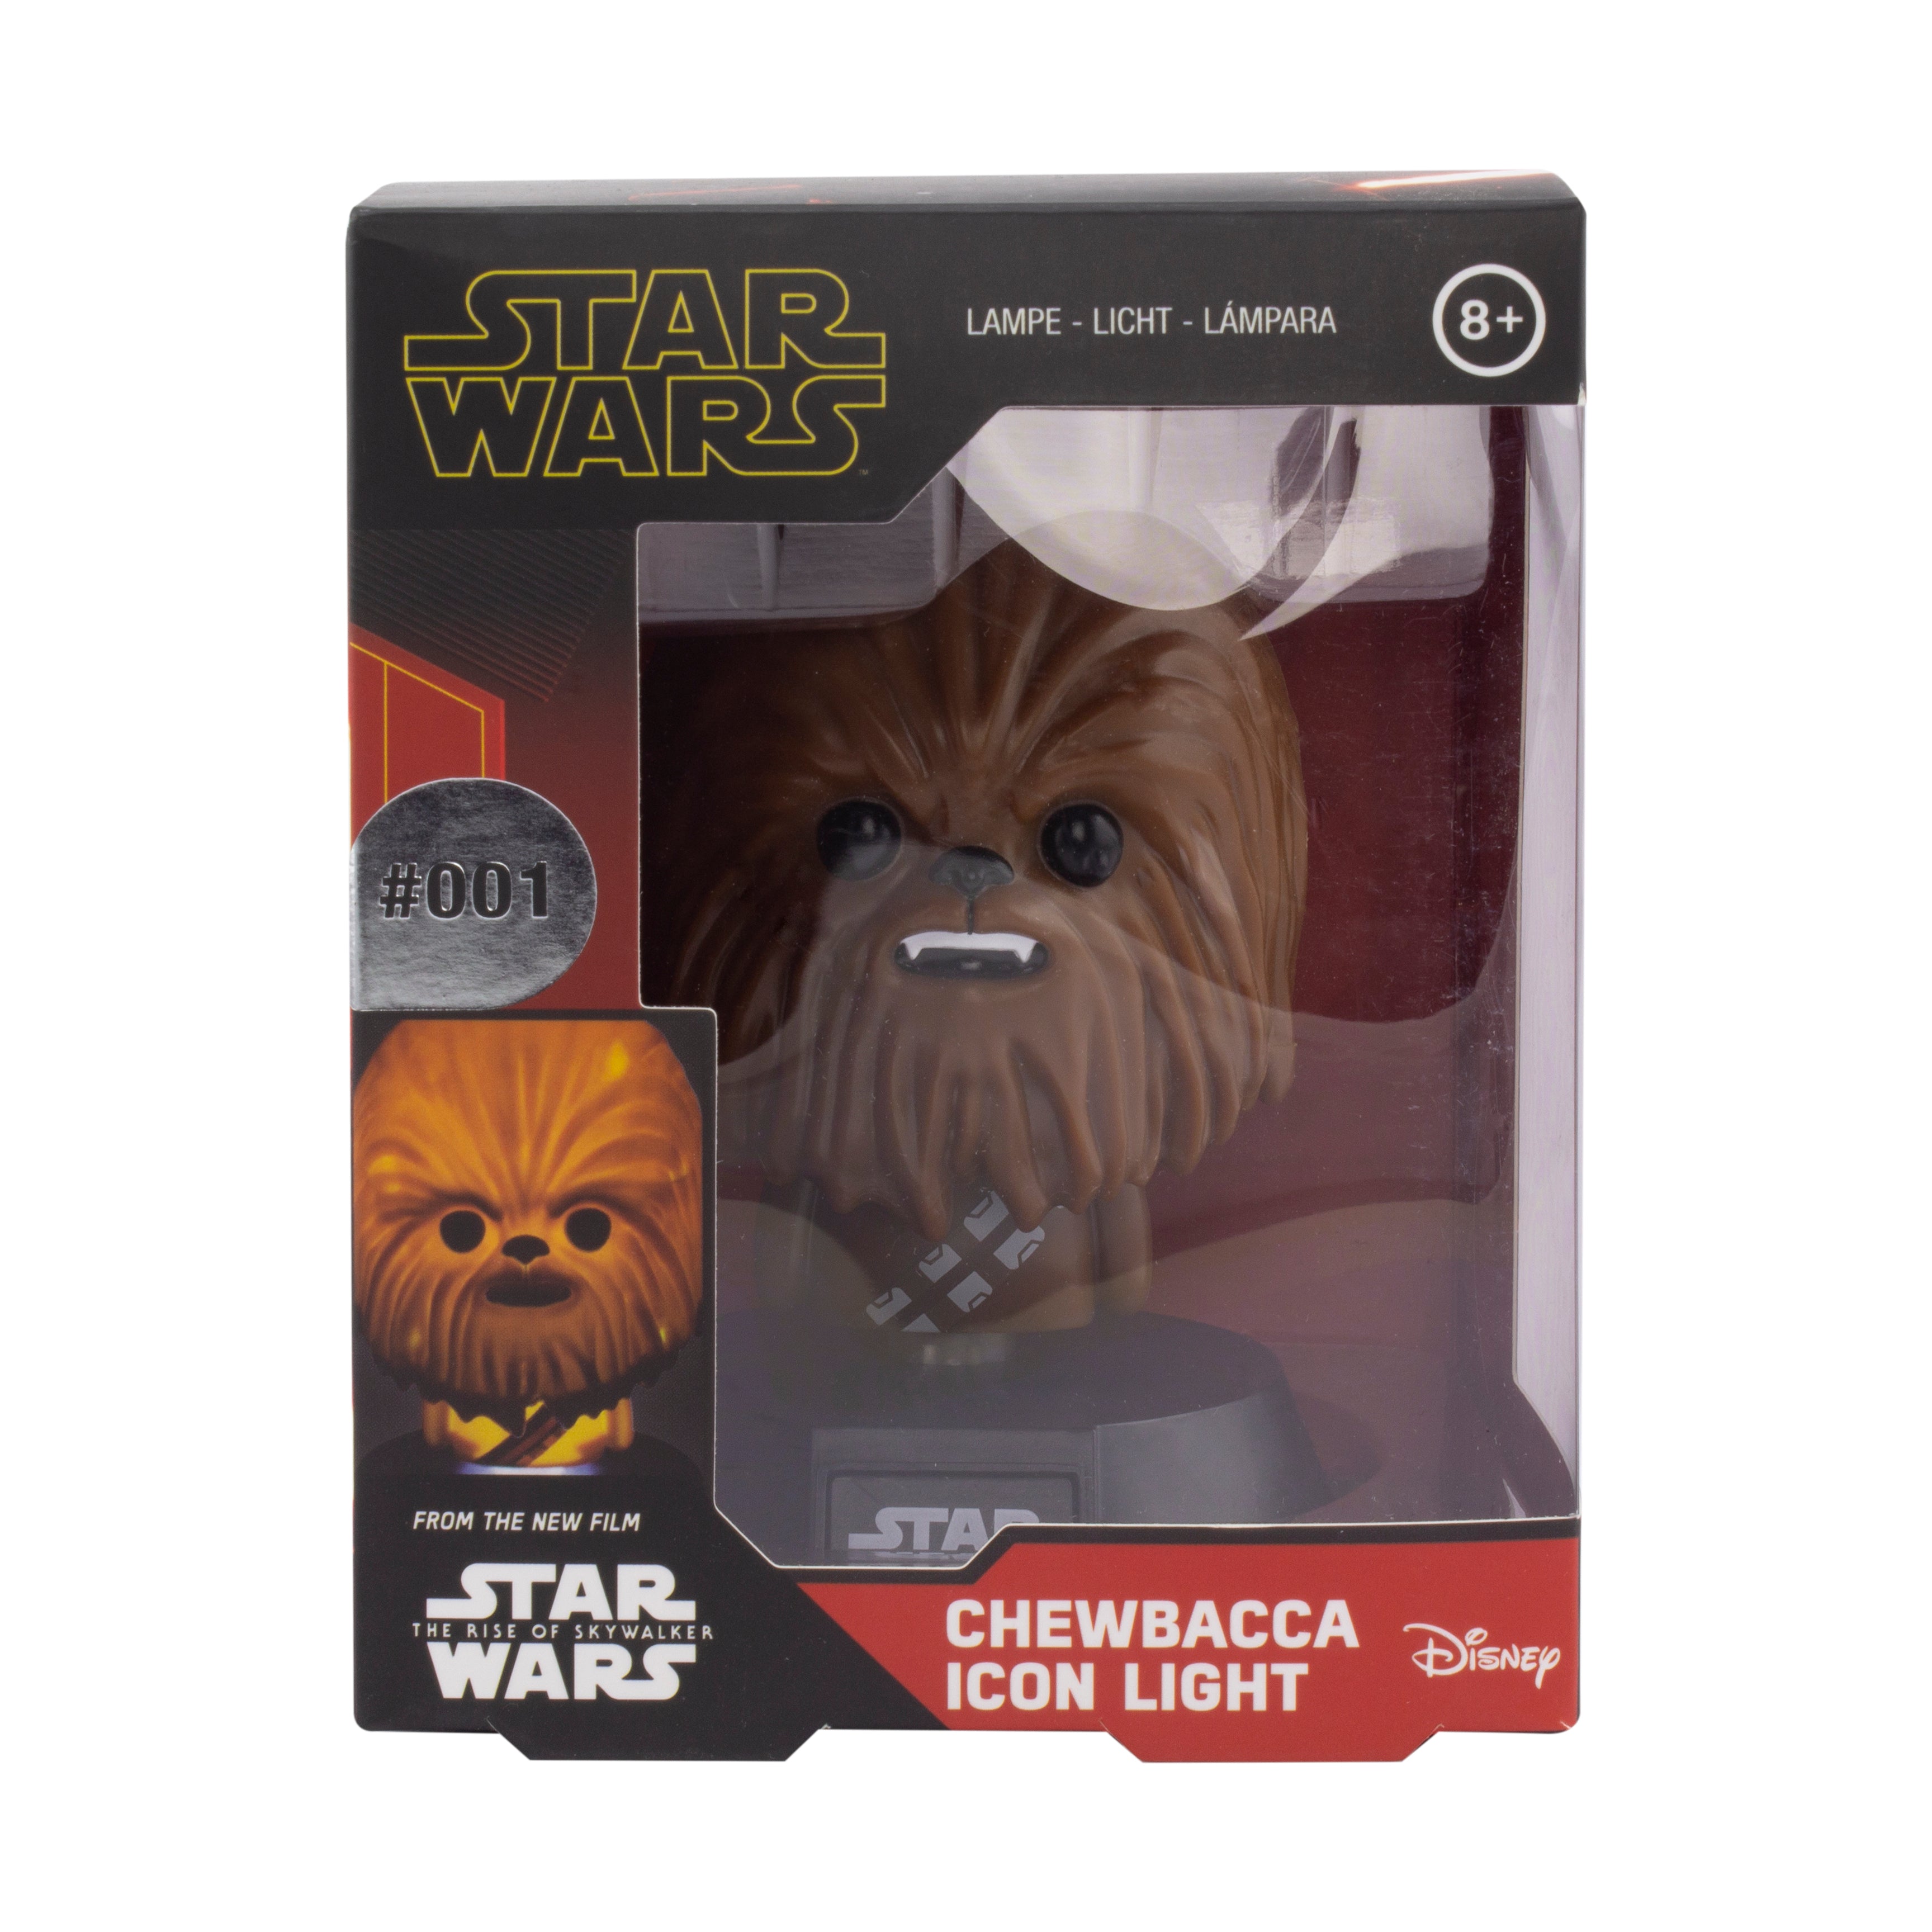 Star Wars Chewbacca Icon Light